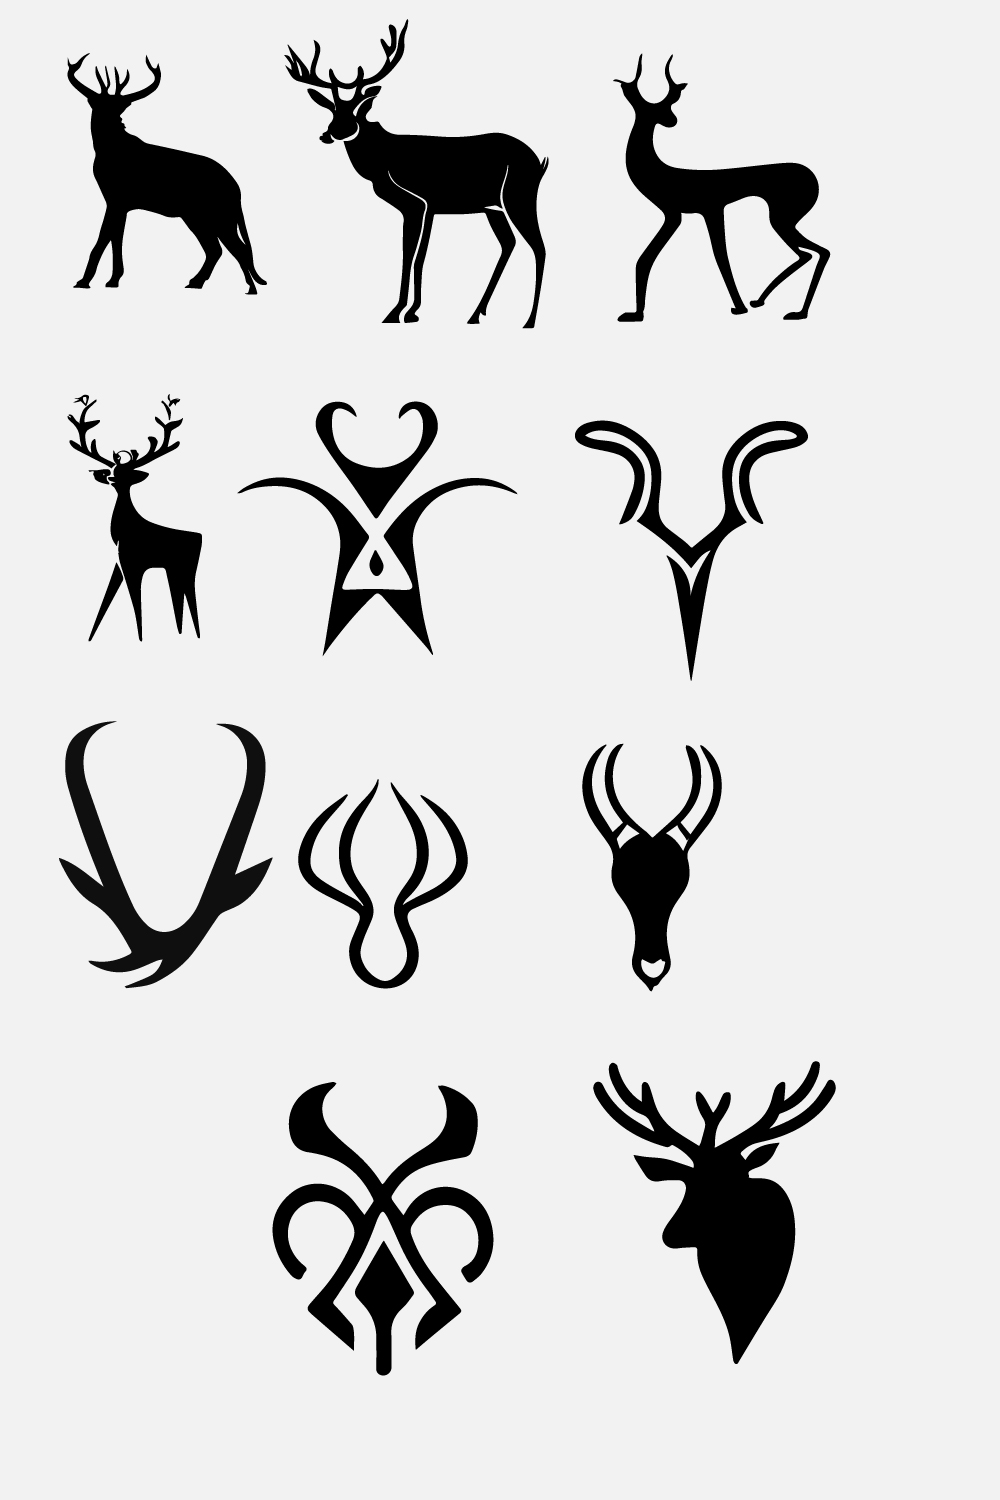 deer logo pinterest preview image.